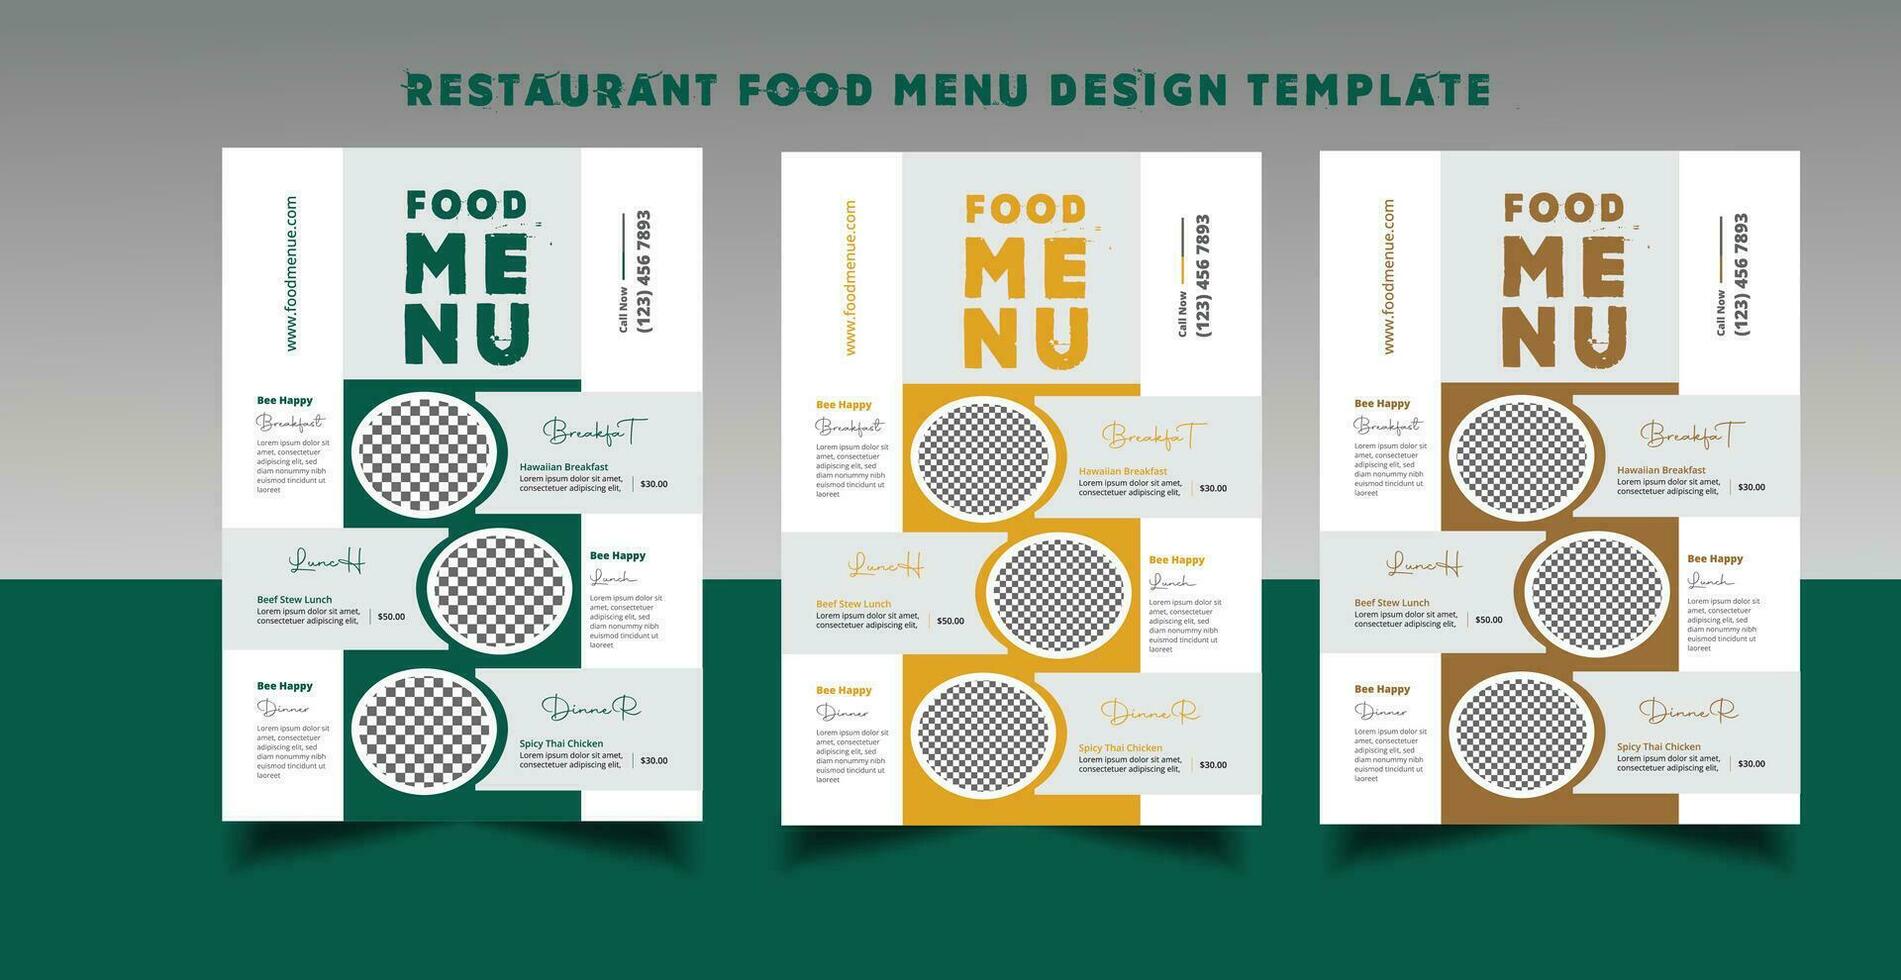 Restaurant Food Menu Design Template vector